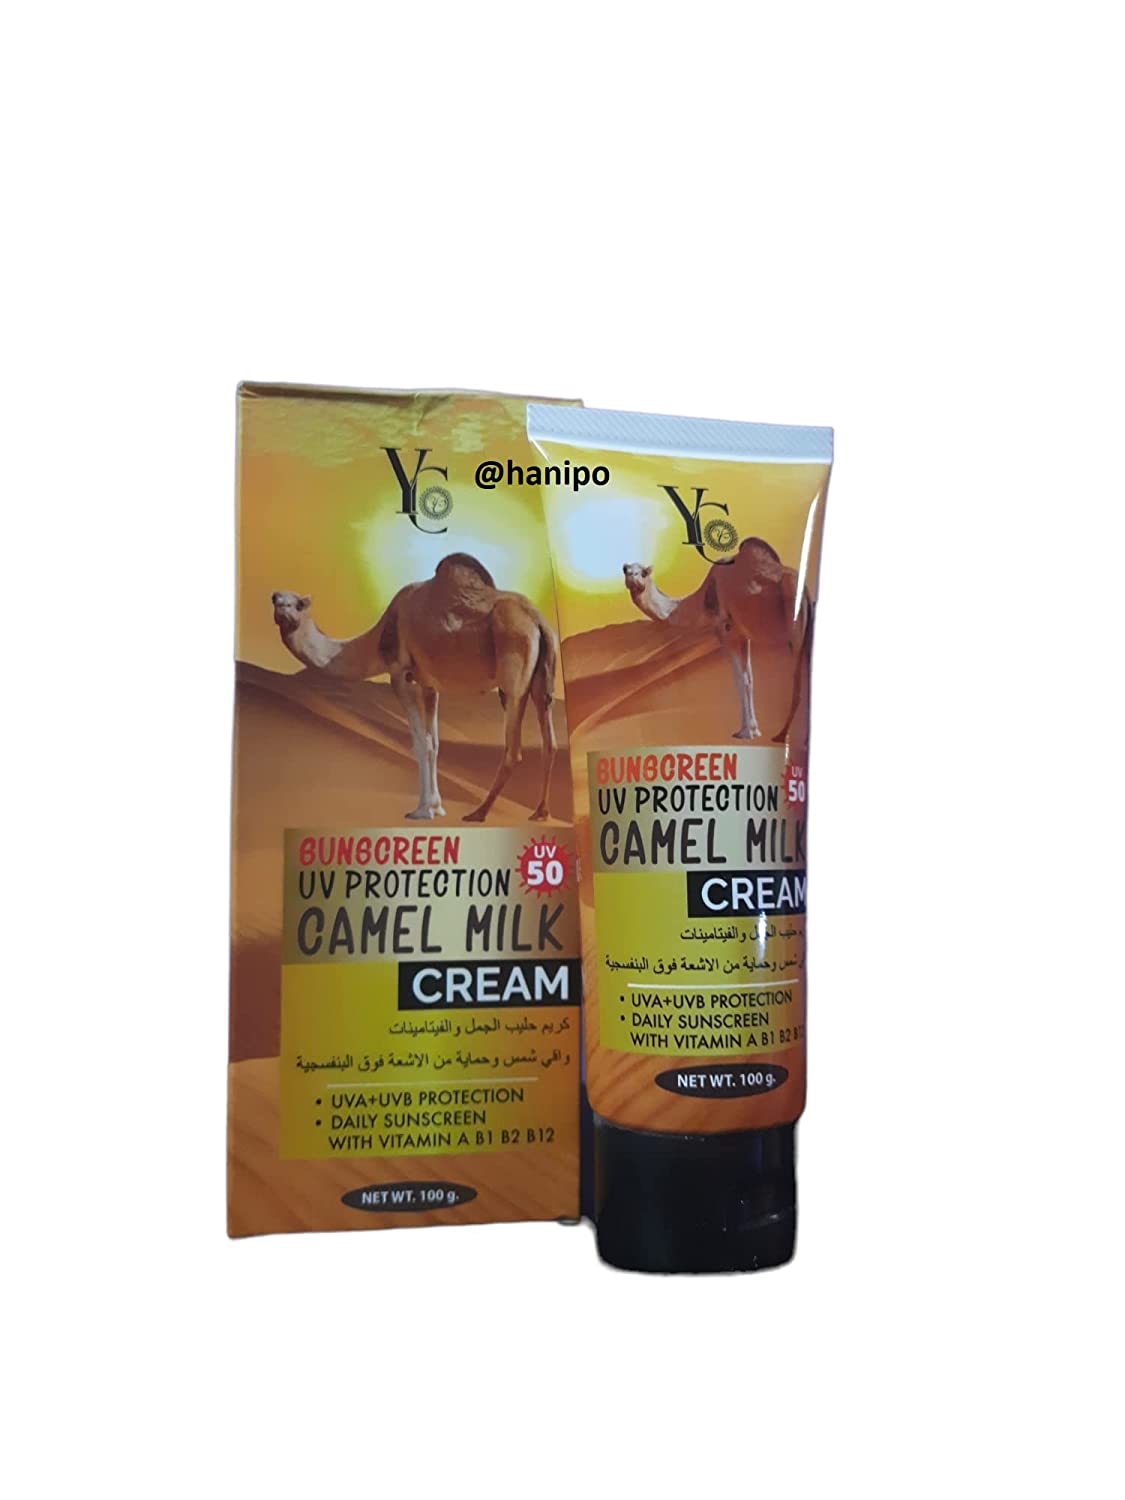 YC Sunscreen UV Protection Camel Milk Cream 100g 